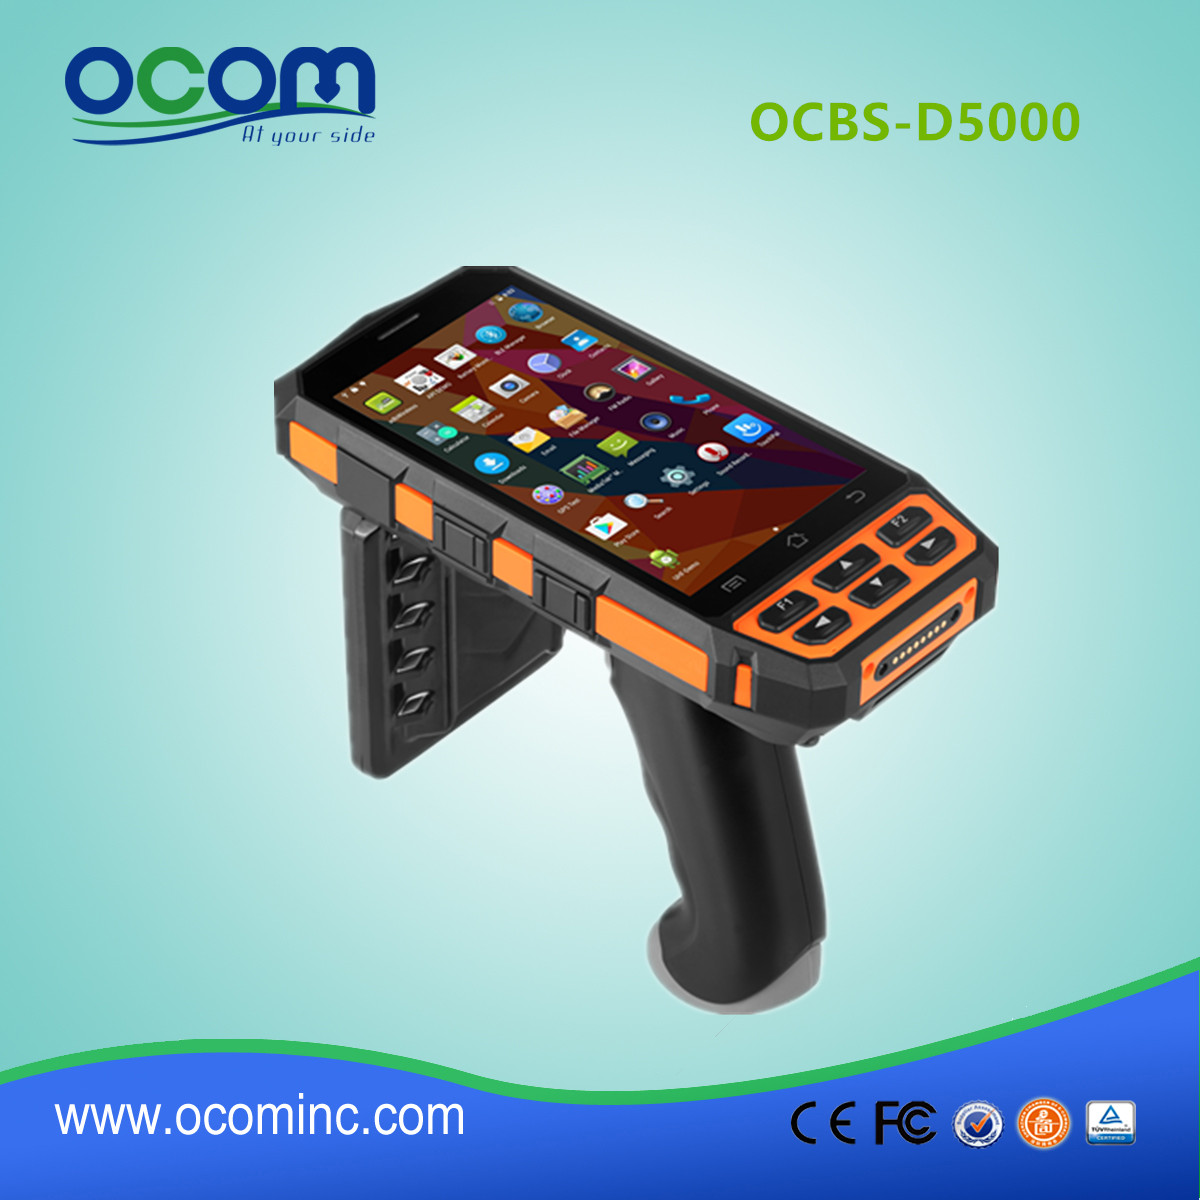 OCBS-D5000 Handheld terminal portátil de recolección de datos móvil android